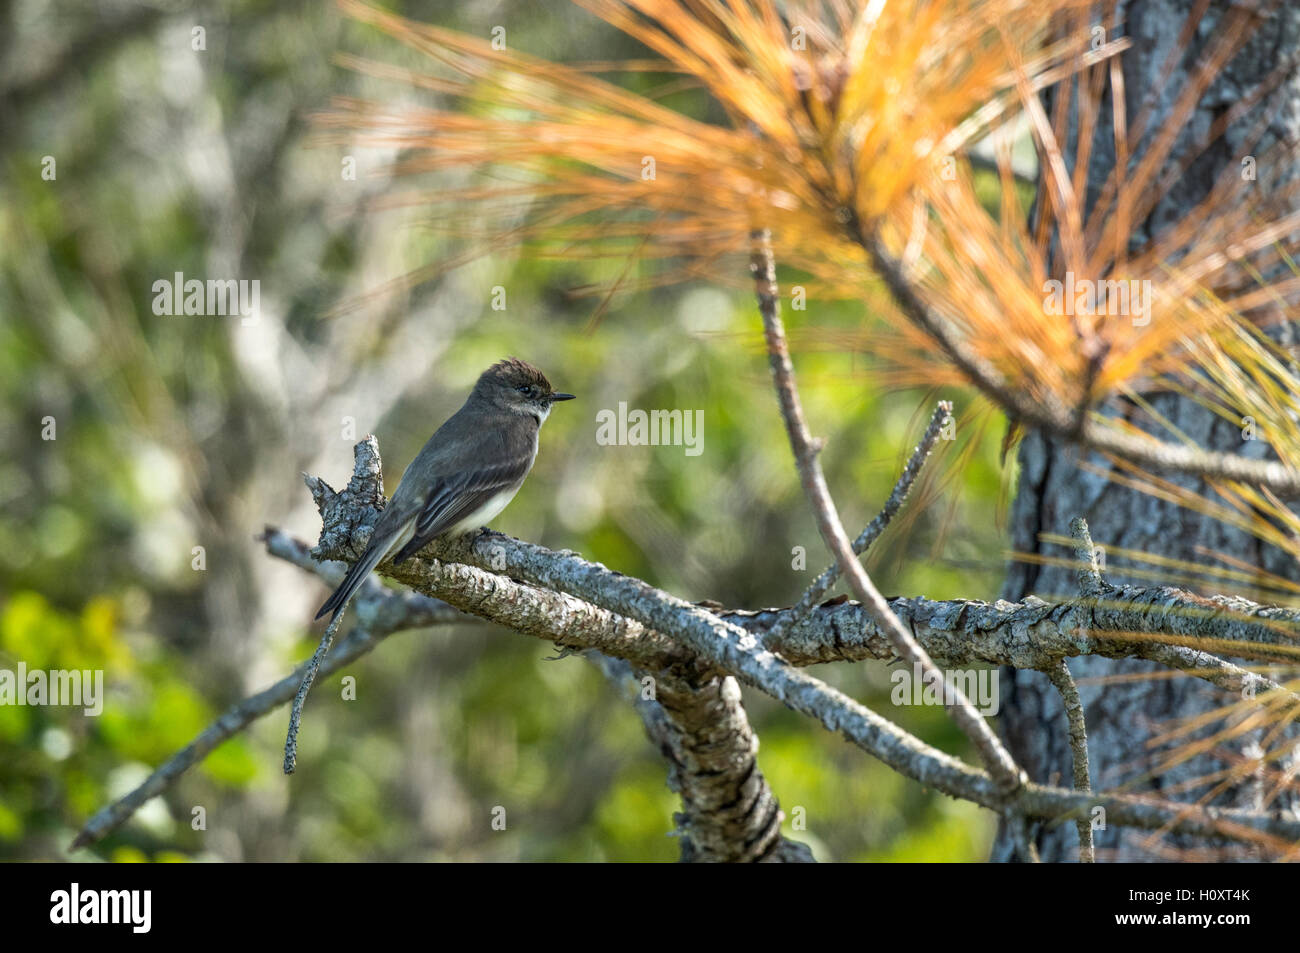 Flycatcher bird perched in pine tree Stock Photo